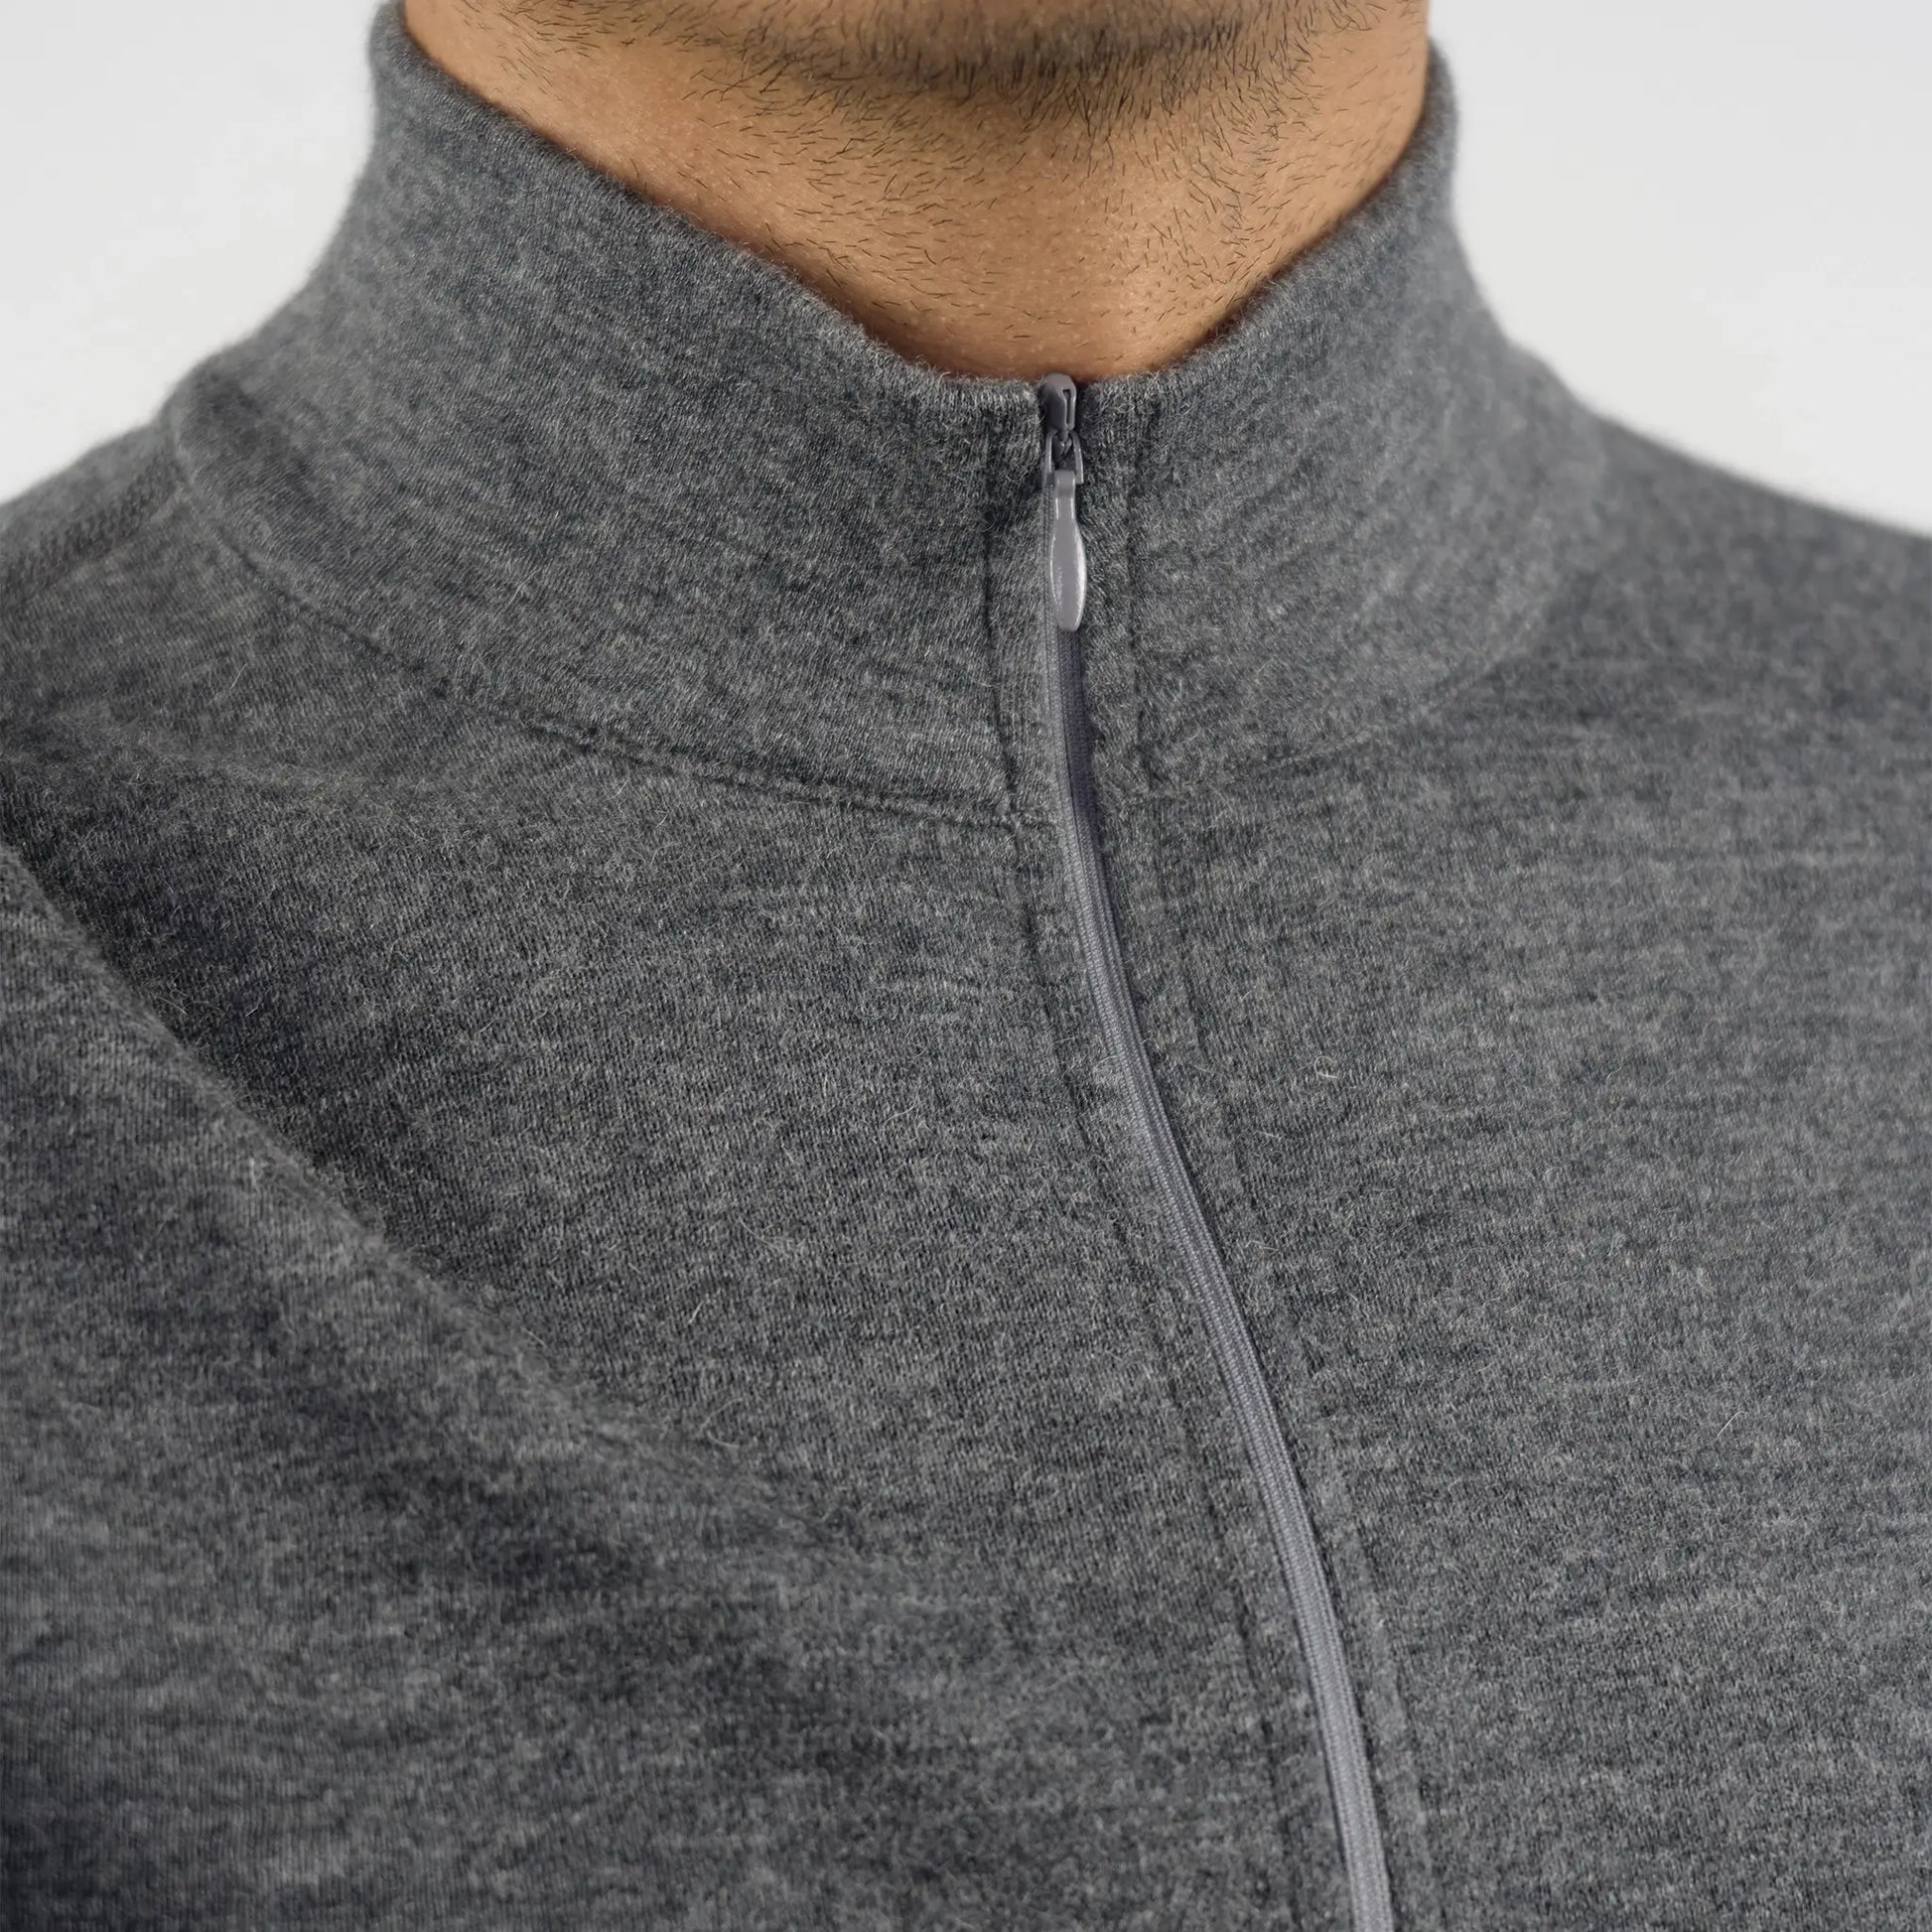 mens thermal wool baselayer half zip color gray